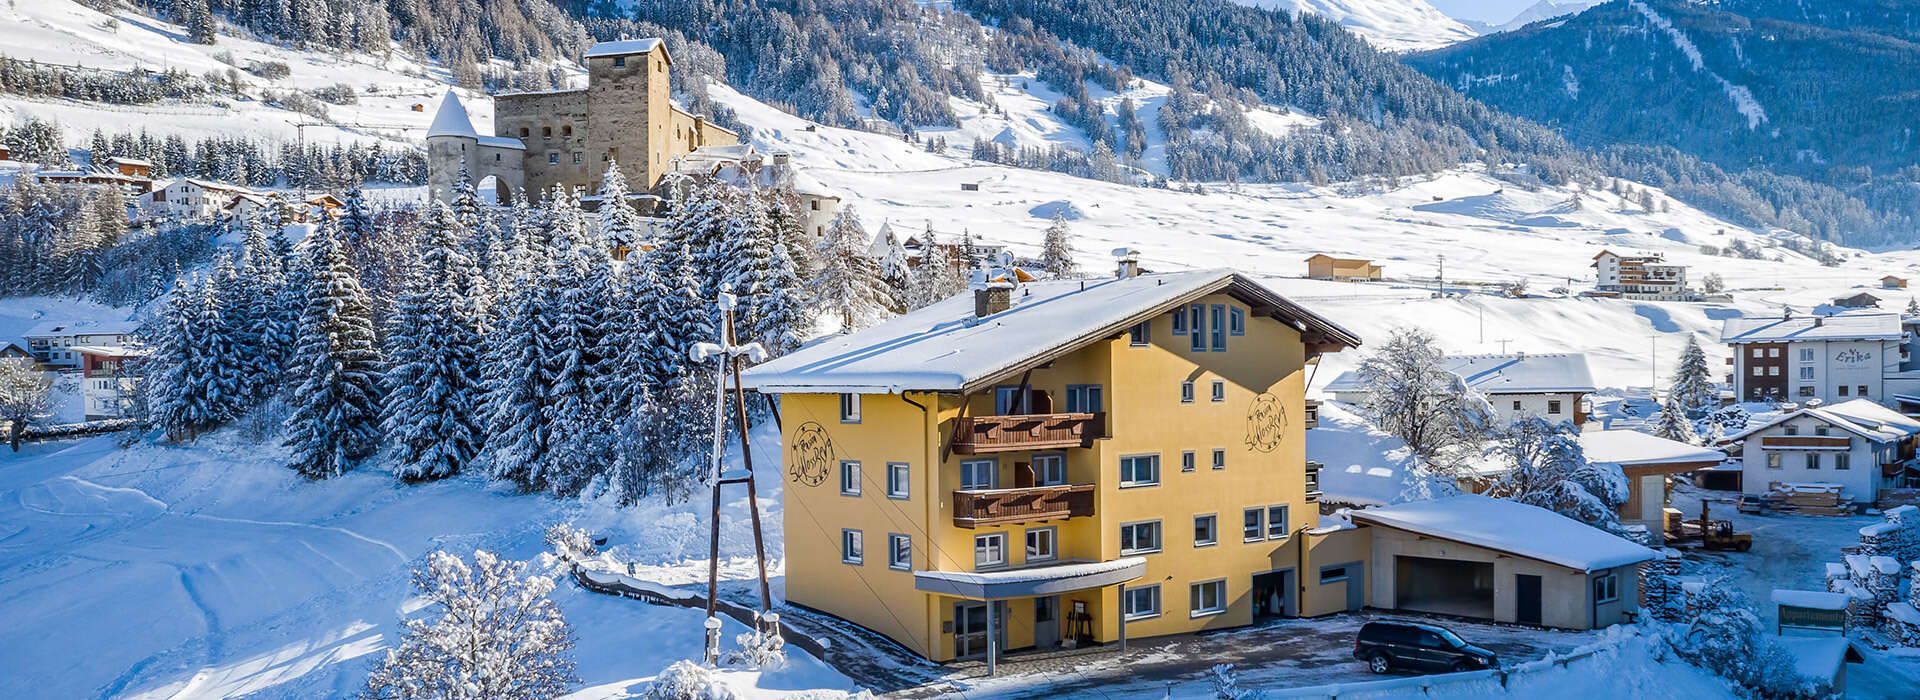 Hotel Schlossberg im Winter